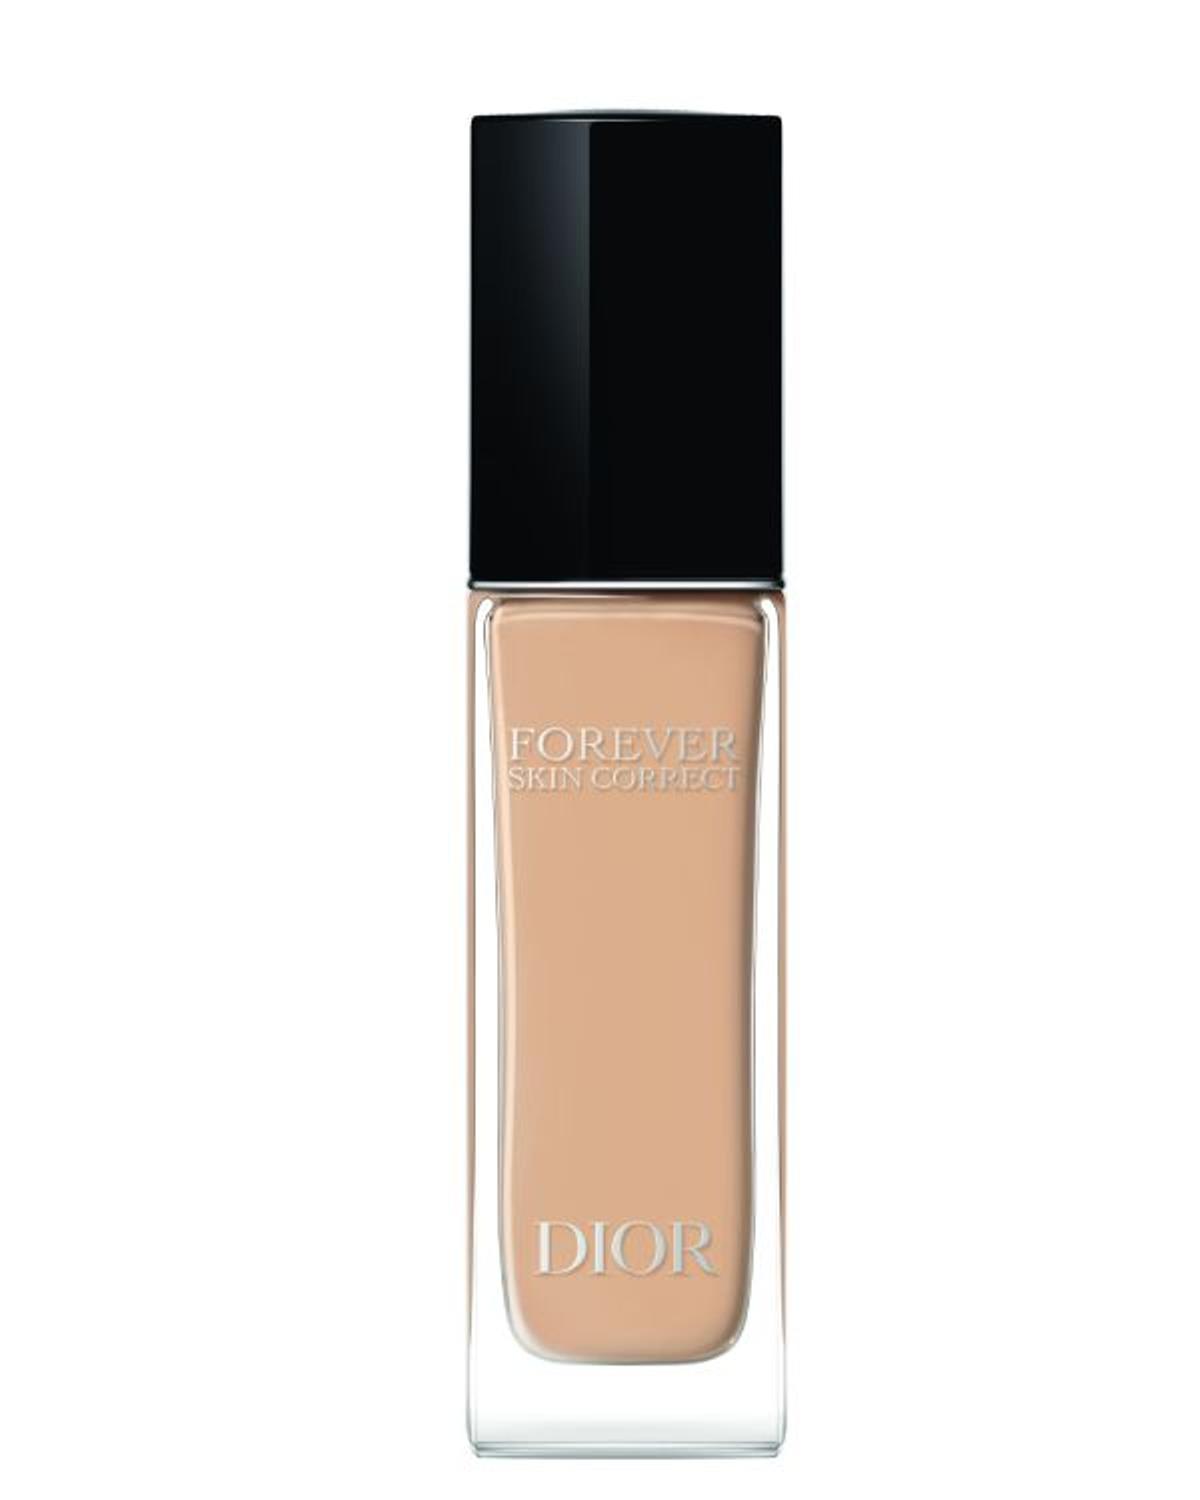 Forever Skin Correct, de Dior